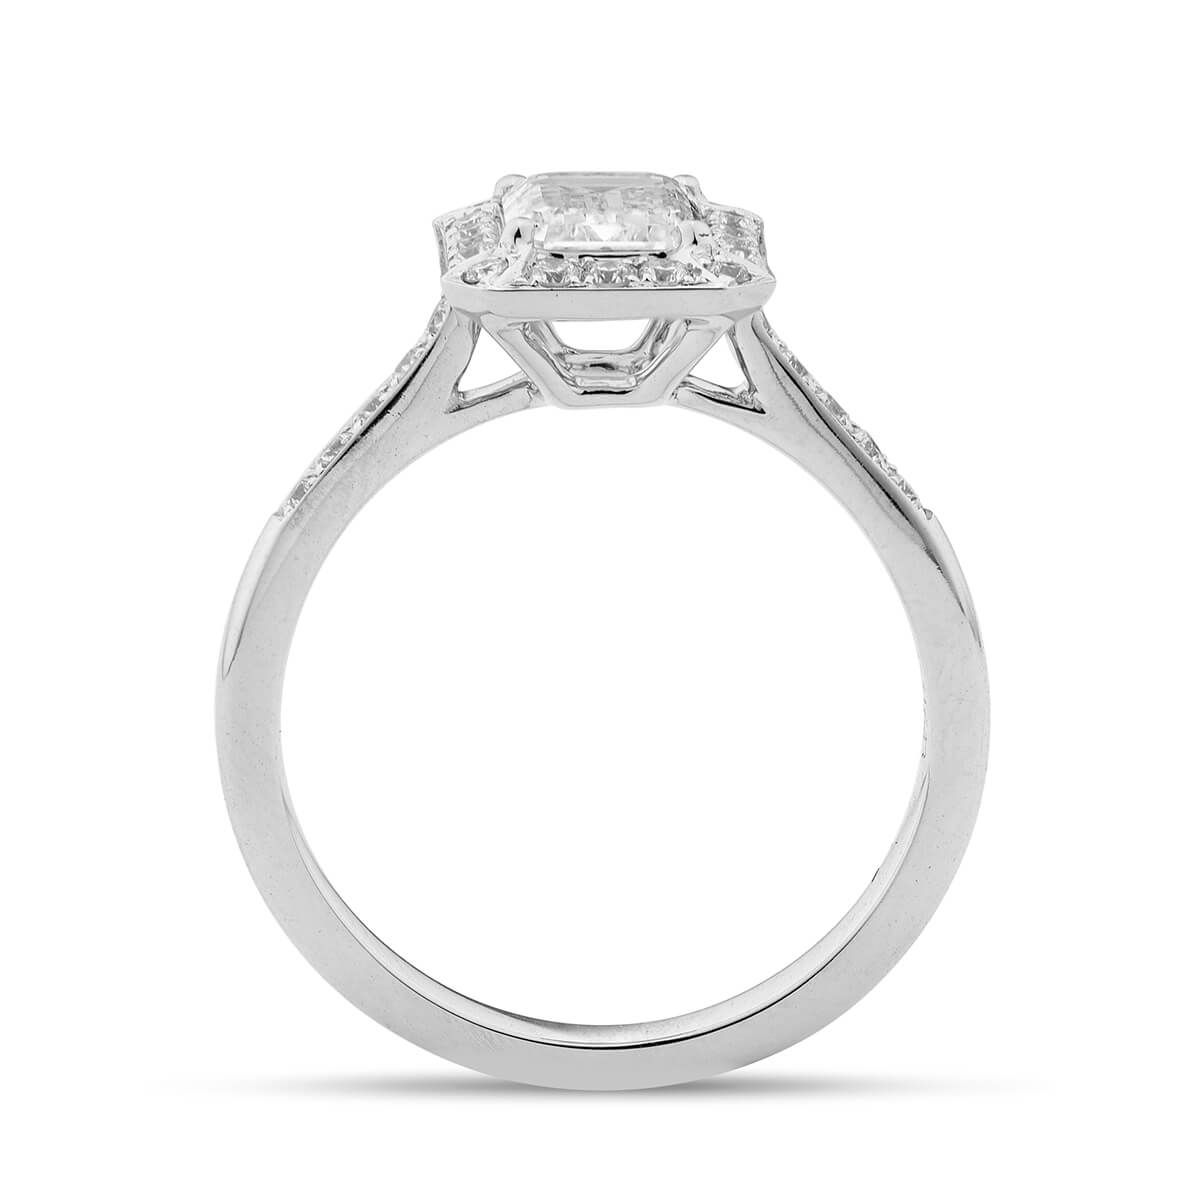  White Diamond Ring, 1.09 Ct. (1.25 Ct. TW), Emerald shape, GIA Certified, 2287401135